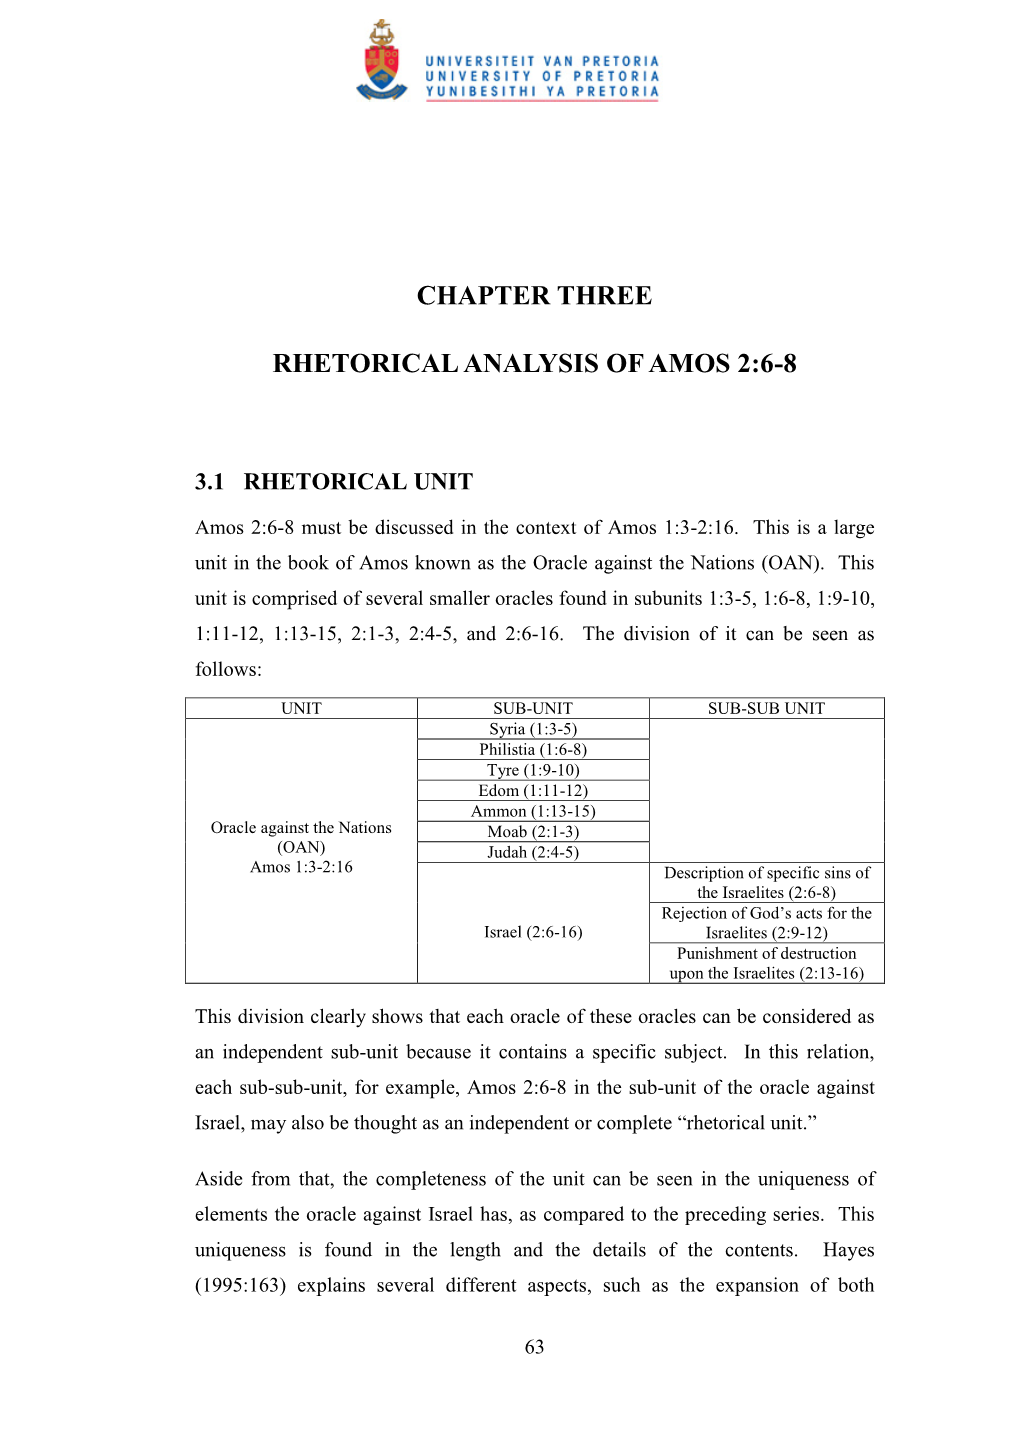 Chapter Three Rhetorical Analysis of Amos 2:6-8